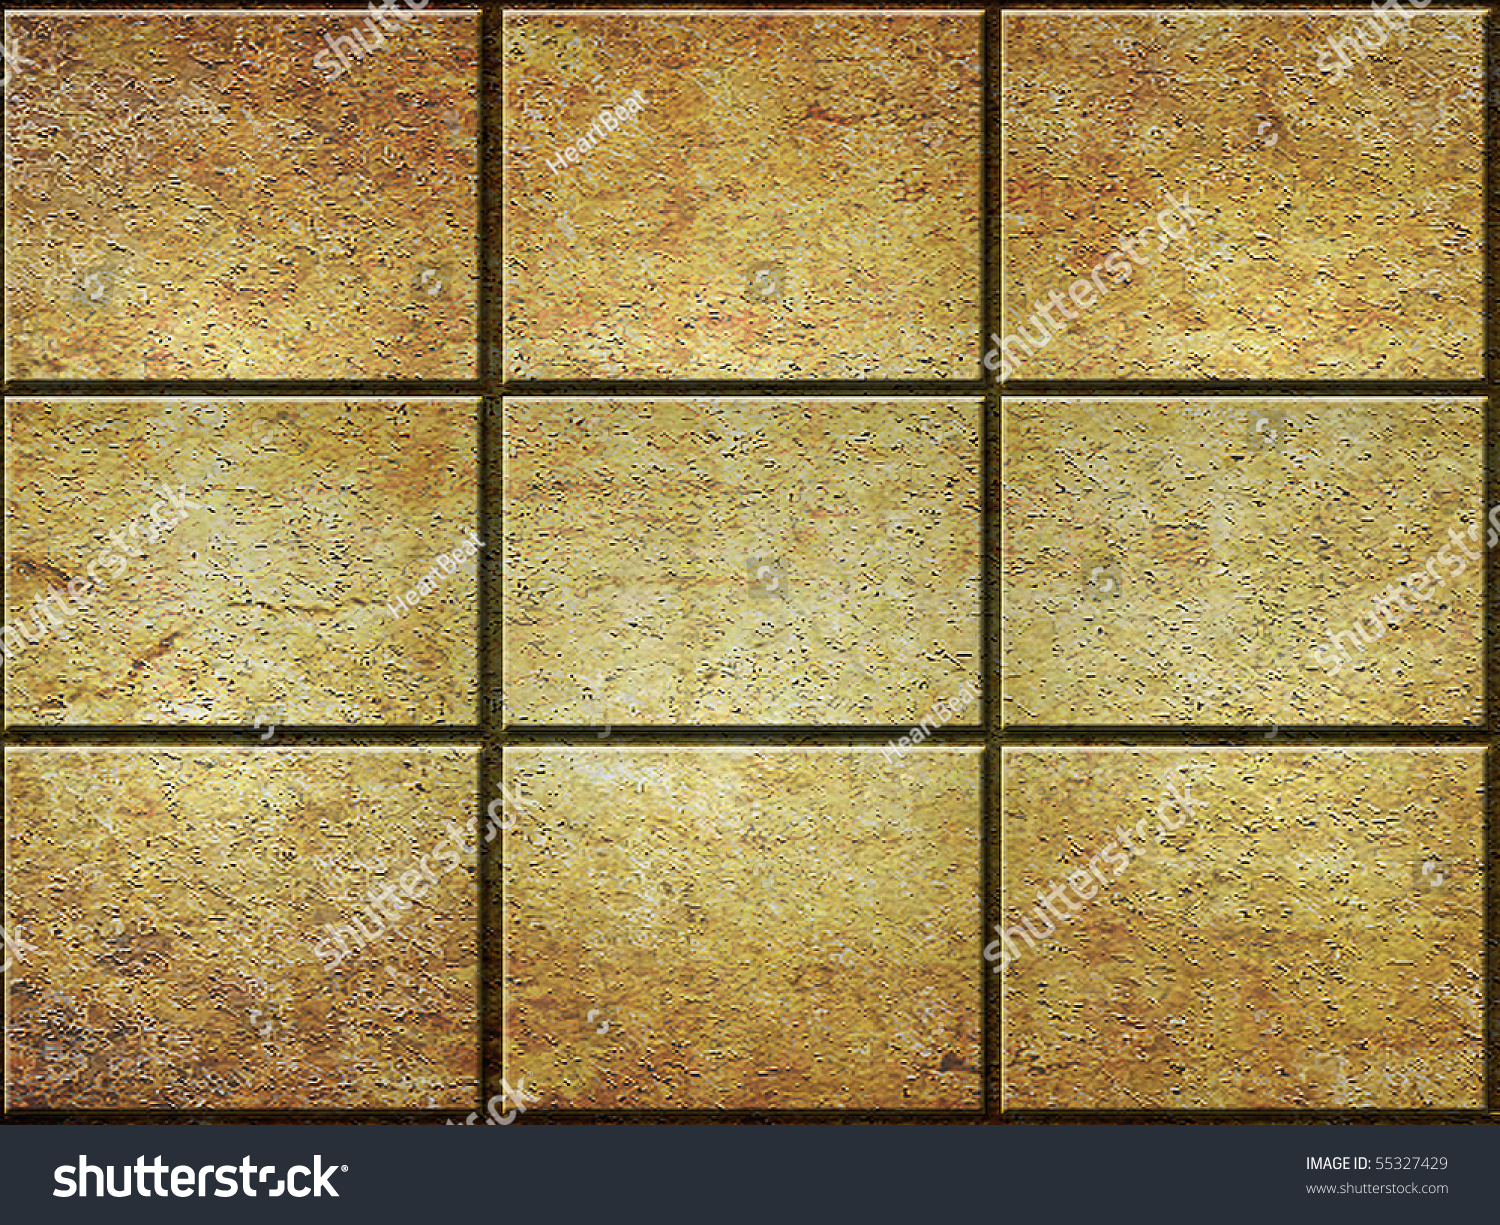 Dirty Tiles Texture Stock Photo 55327429 : Shutterstock